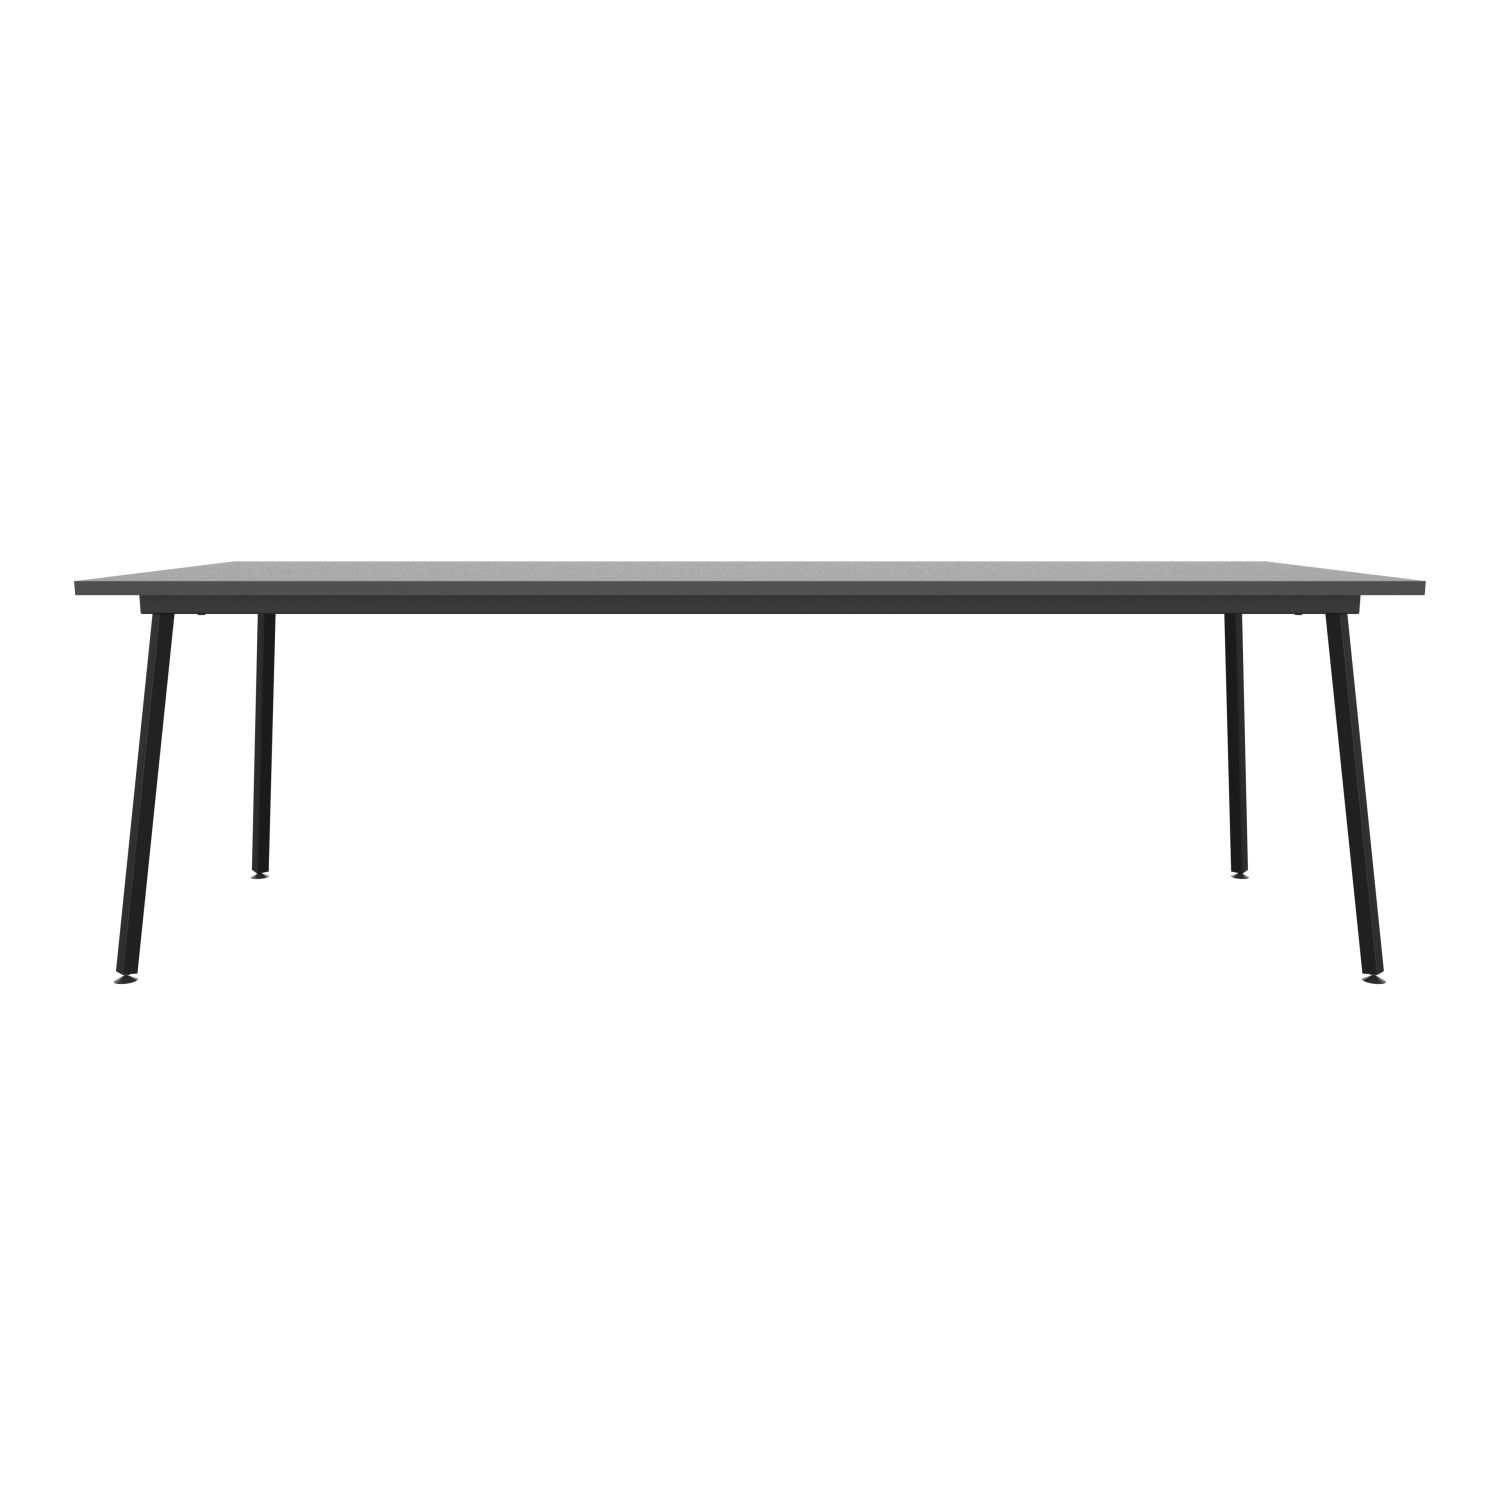 lensvelt maarten baas table fixed height 80x240 table top 26 mm top melamine black edge abs black black frame ral9005